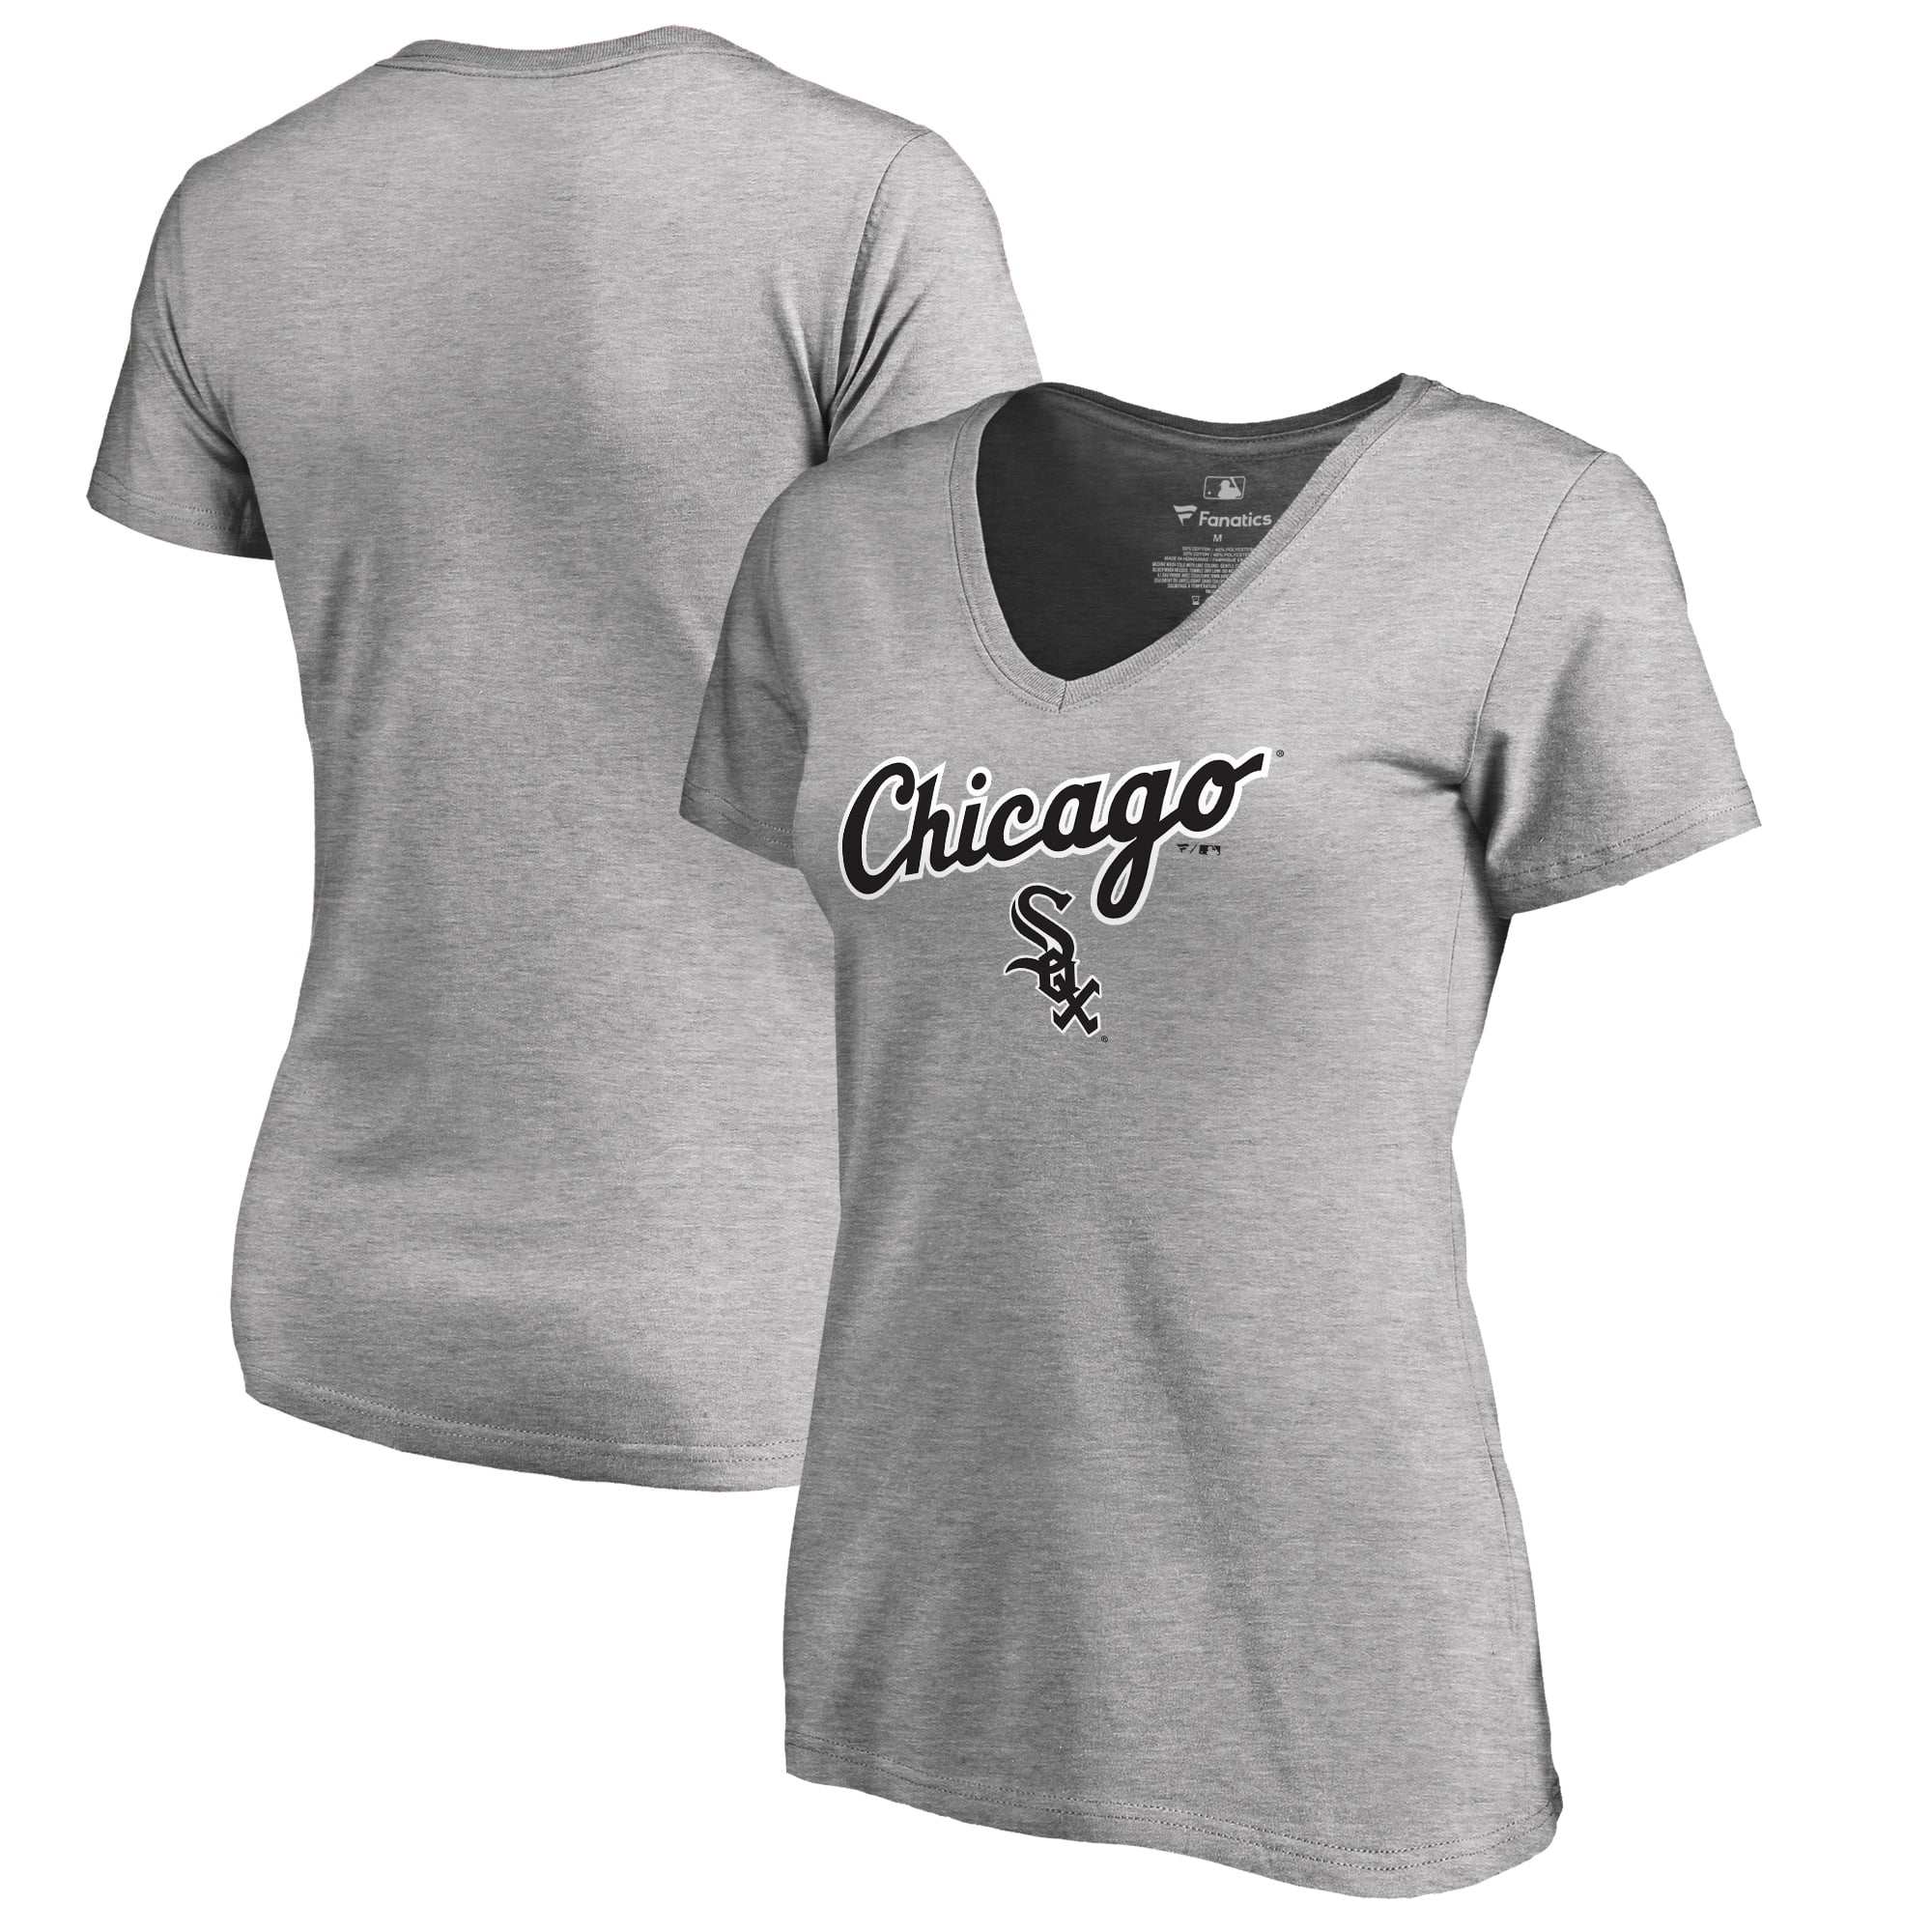 chicago white sox t shirts women's